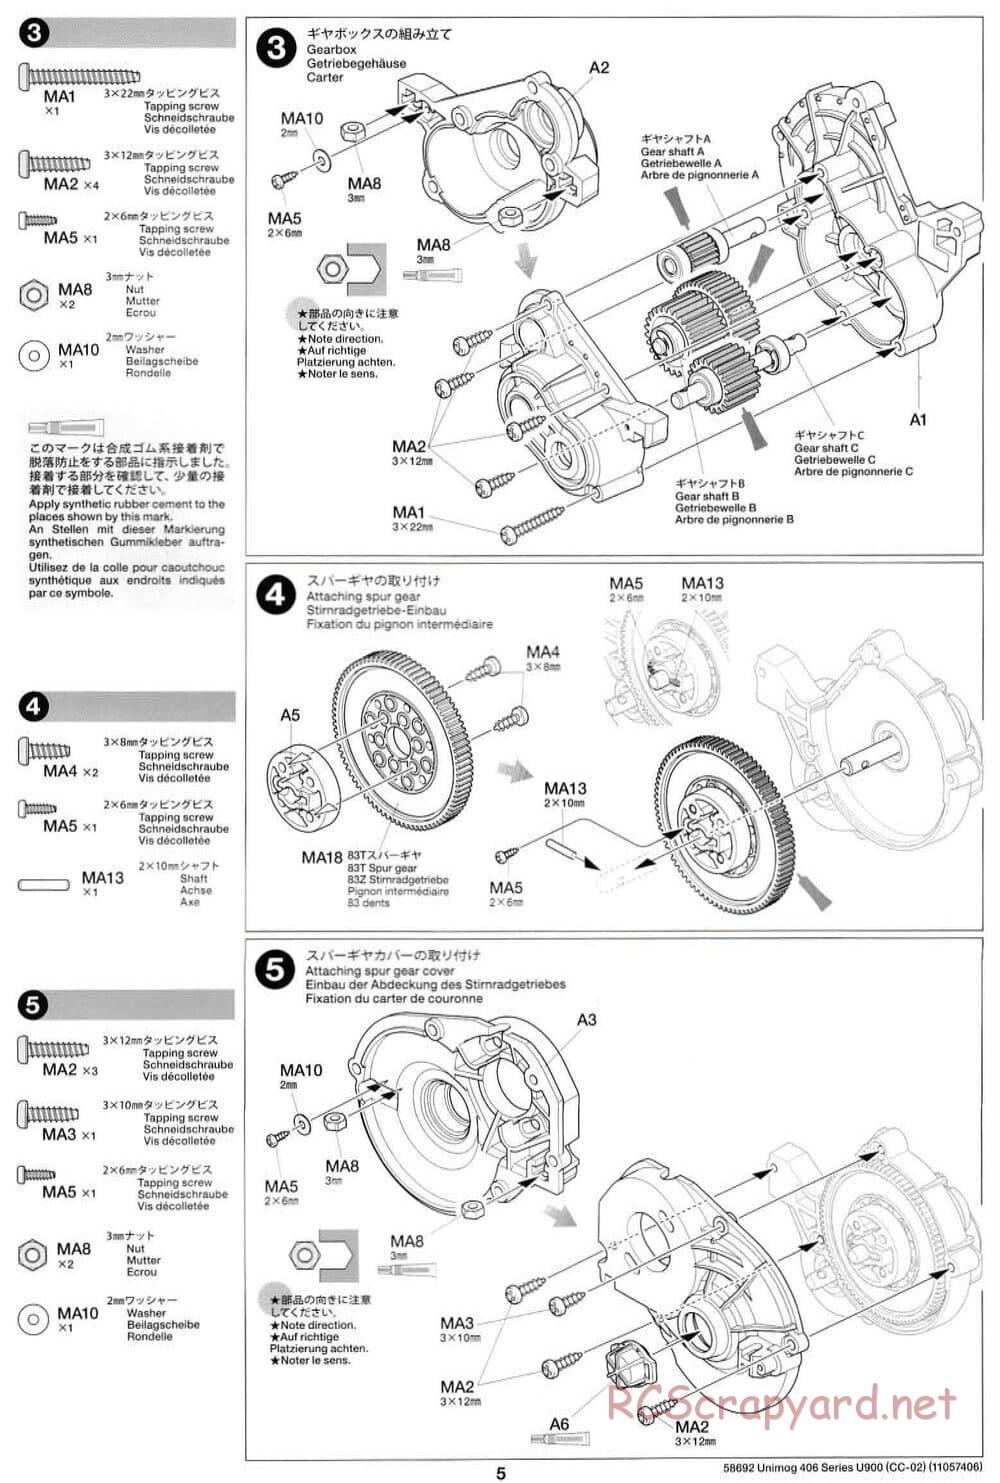 Tamiya - Mercedes-Benz Unimog 406 Series U900 - CC-02 Chassis - Manual - Page 5